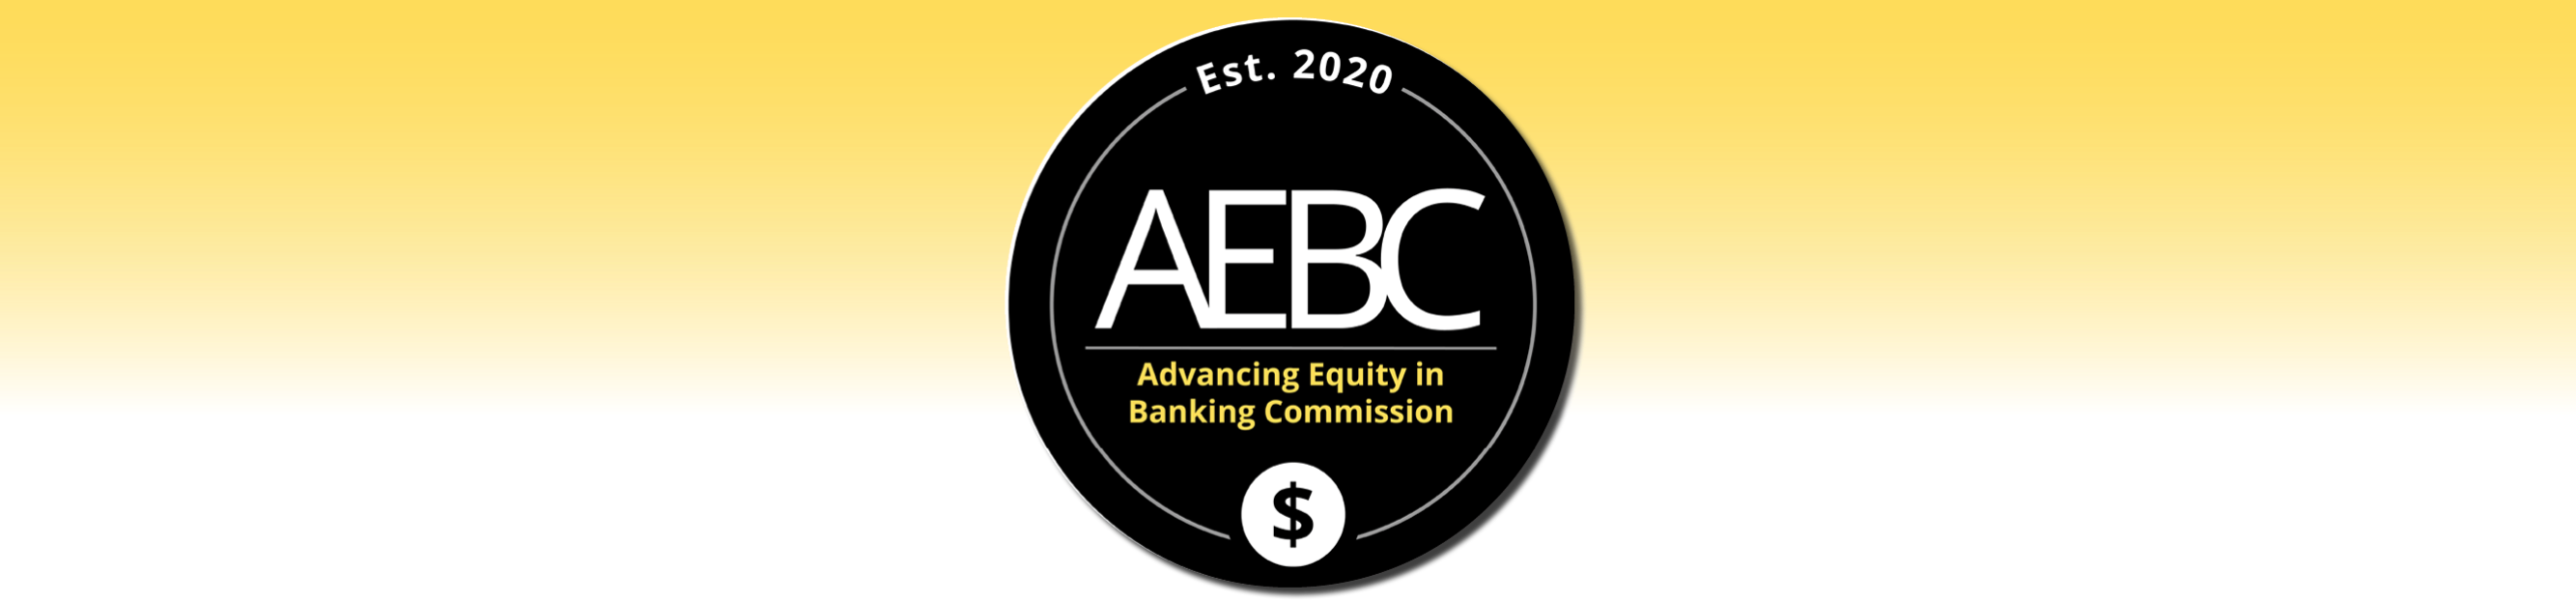 AEBC Logo with Yellow Backdrop